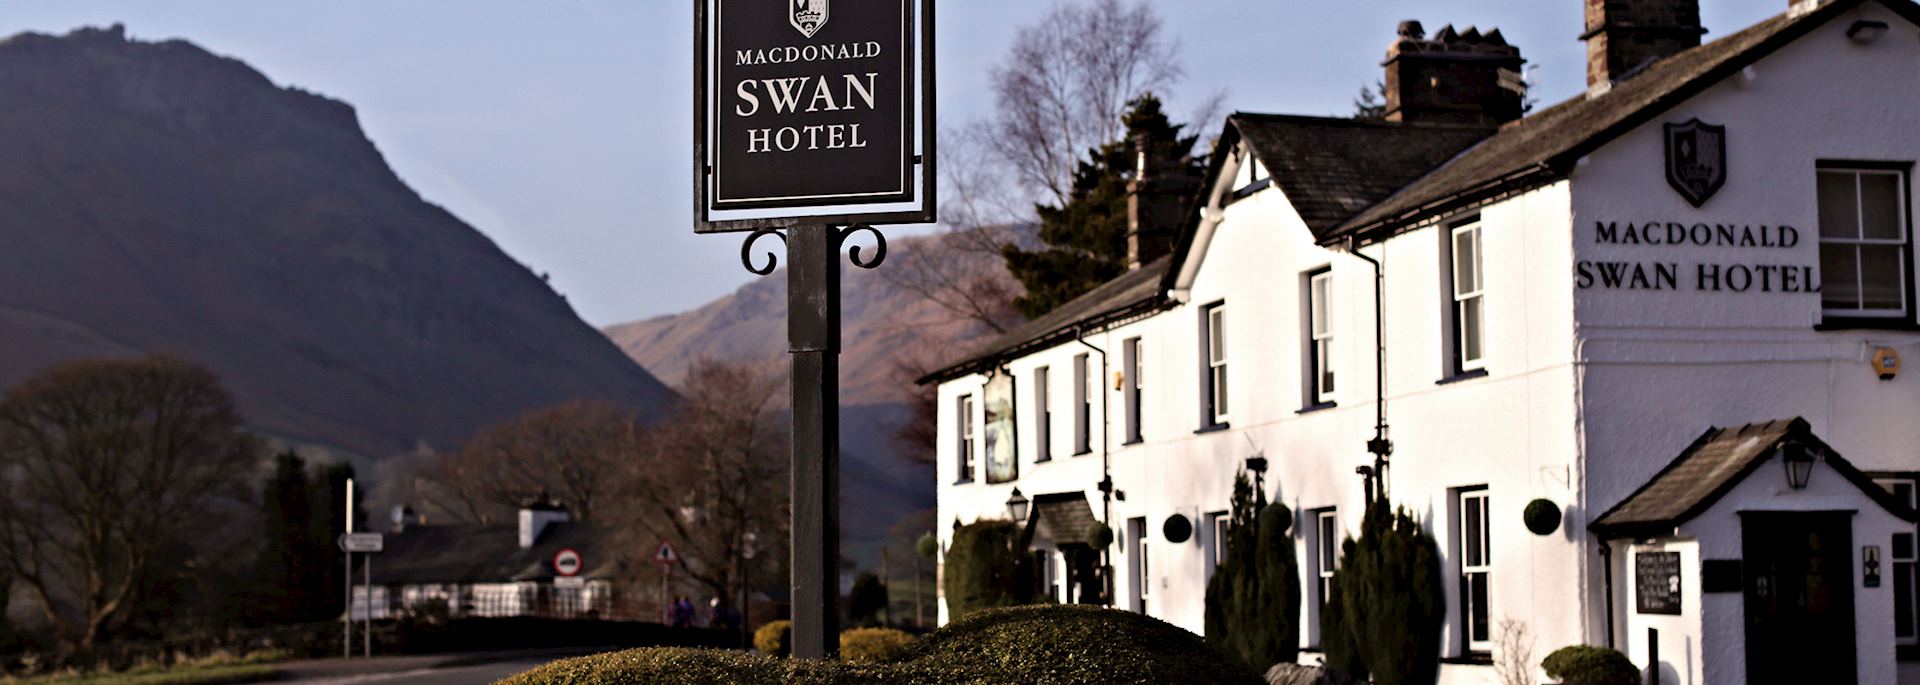 Macdonald Swan Hotel, the Lake District